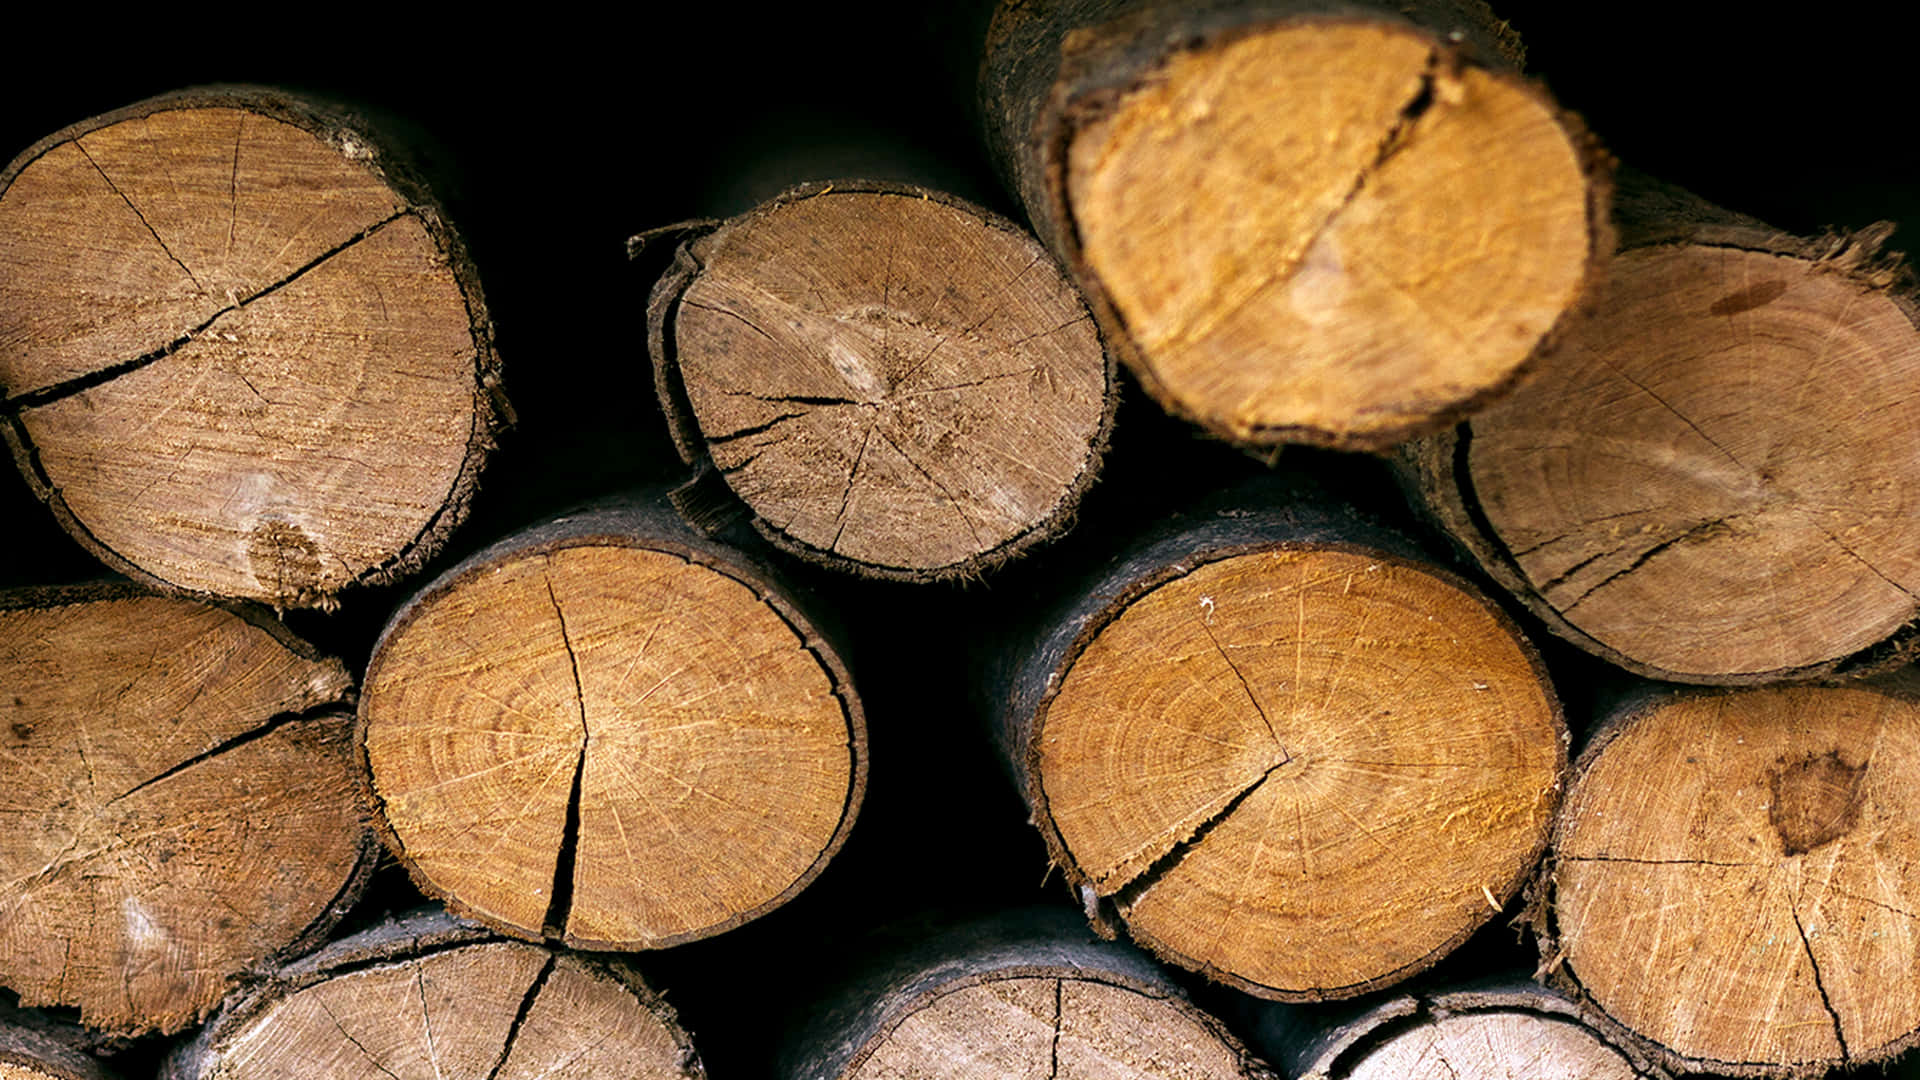 Wood 1920 X 1080 Background